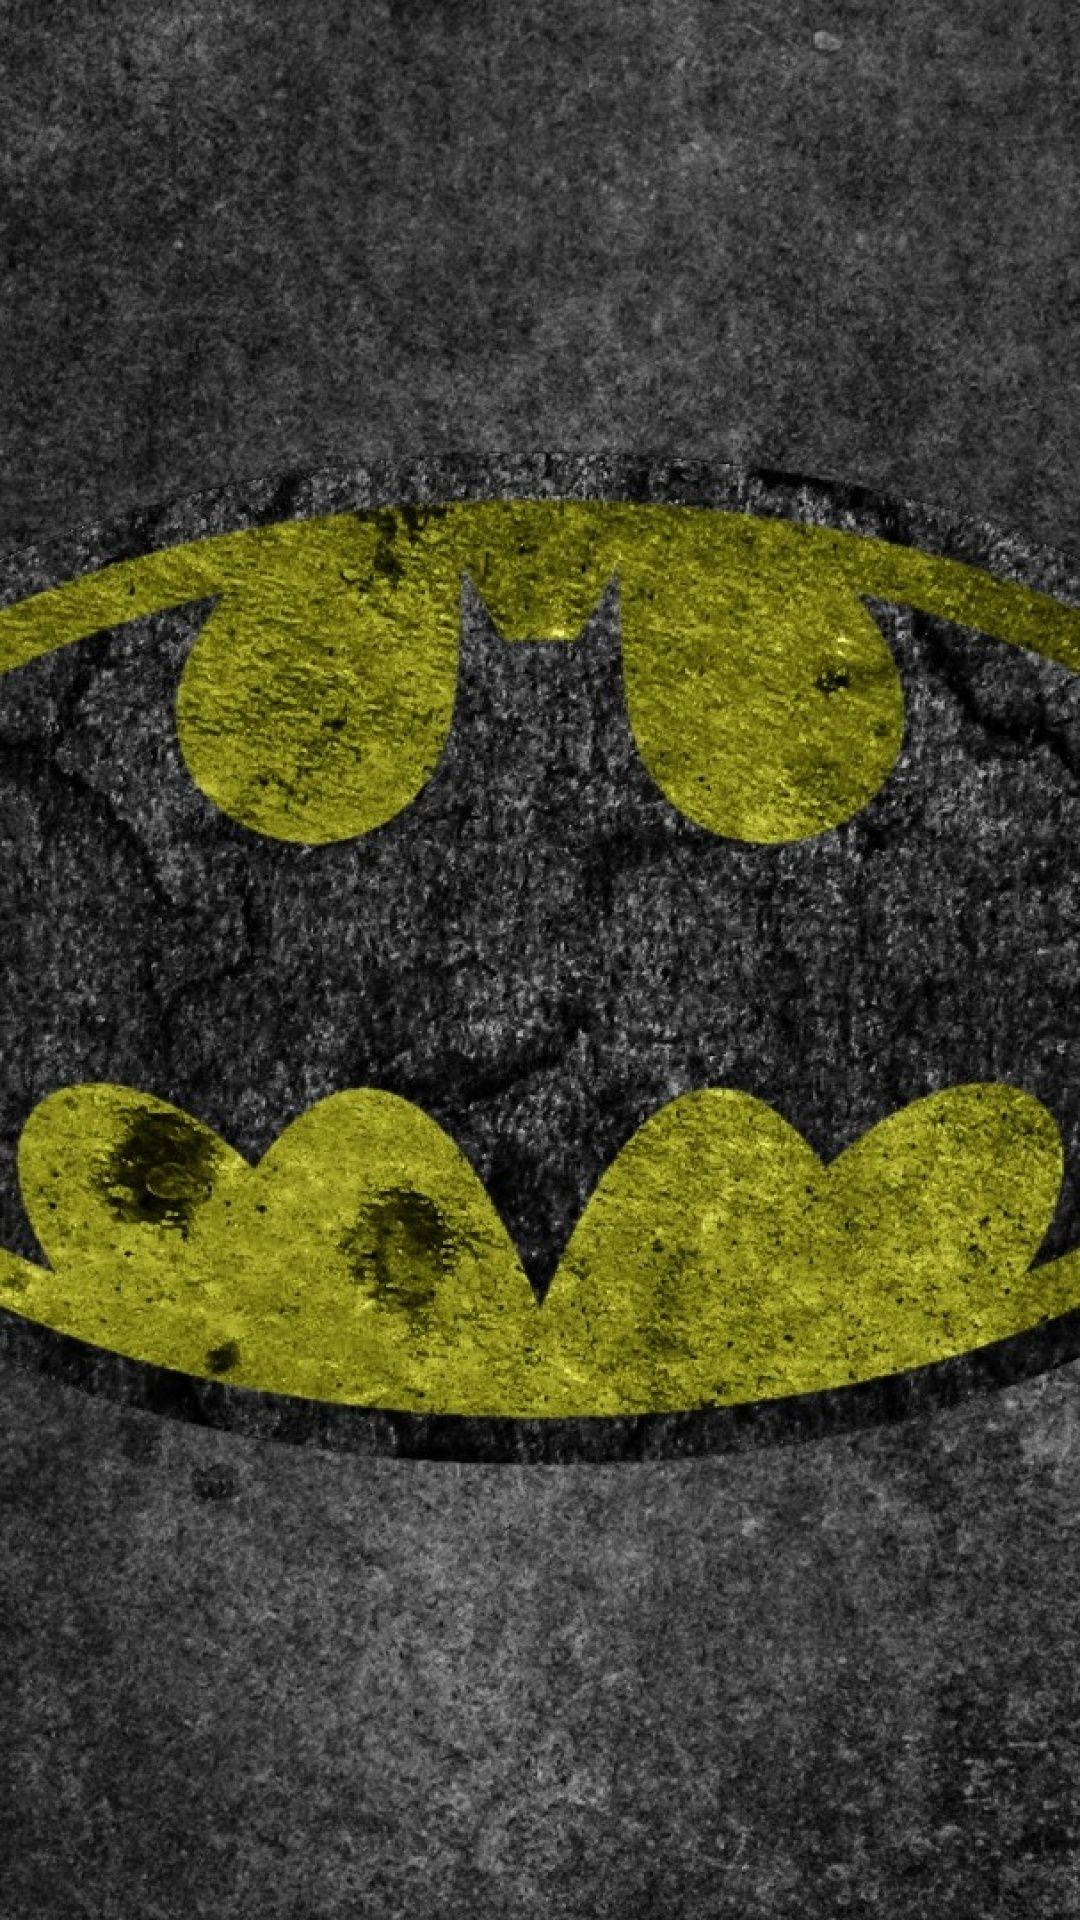 Batman Logo Wallpapers For Phone Wallpaper Cave